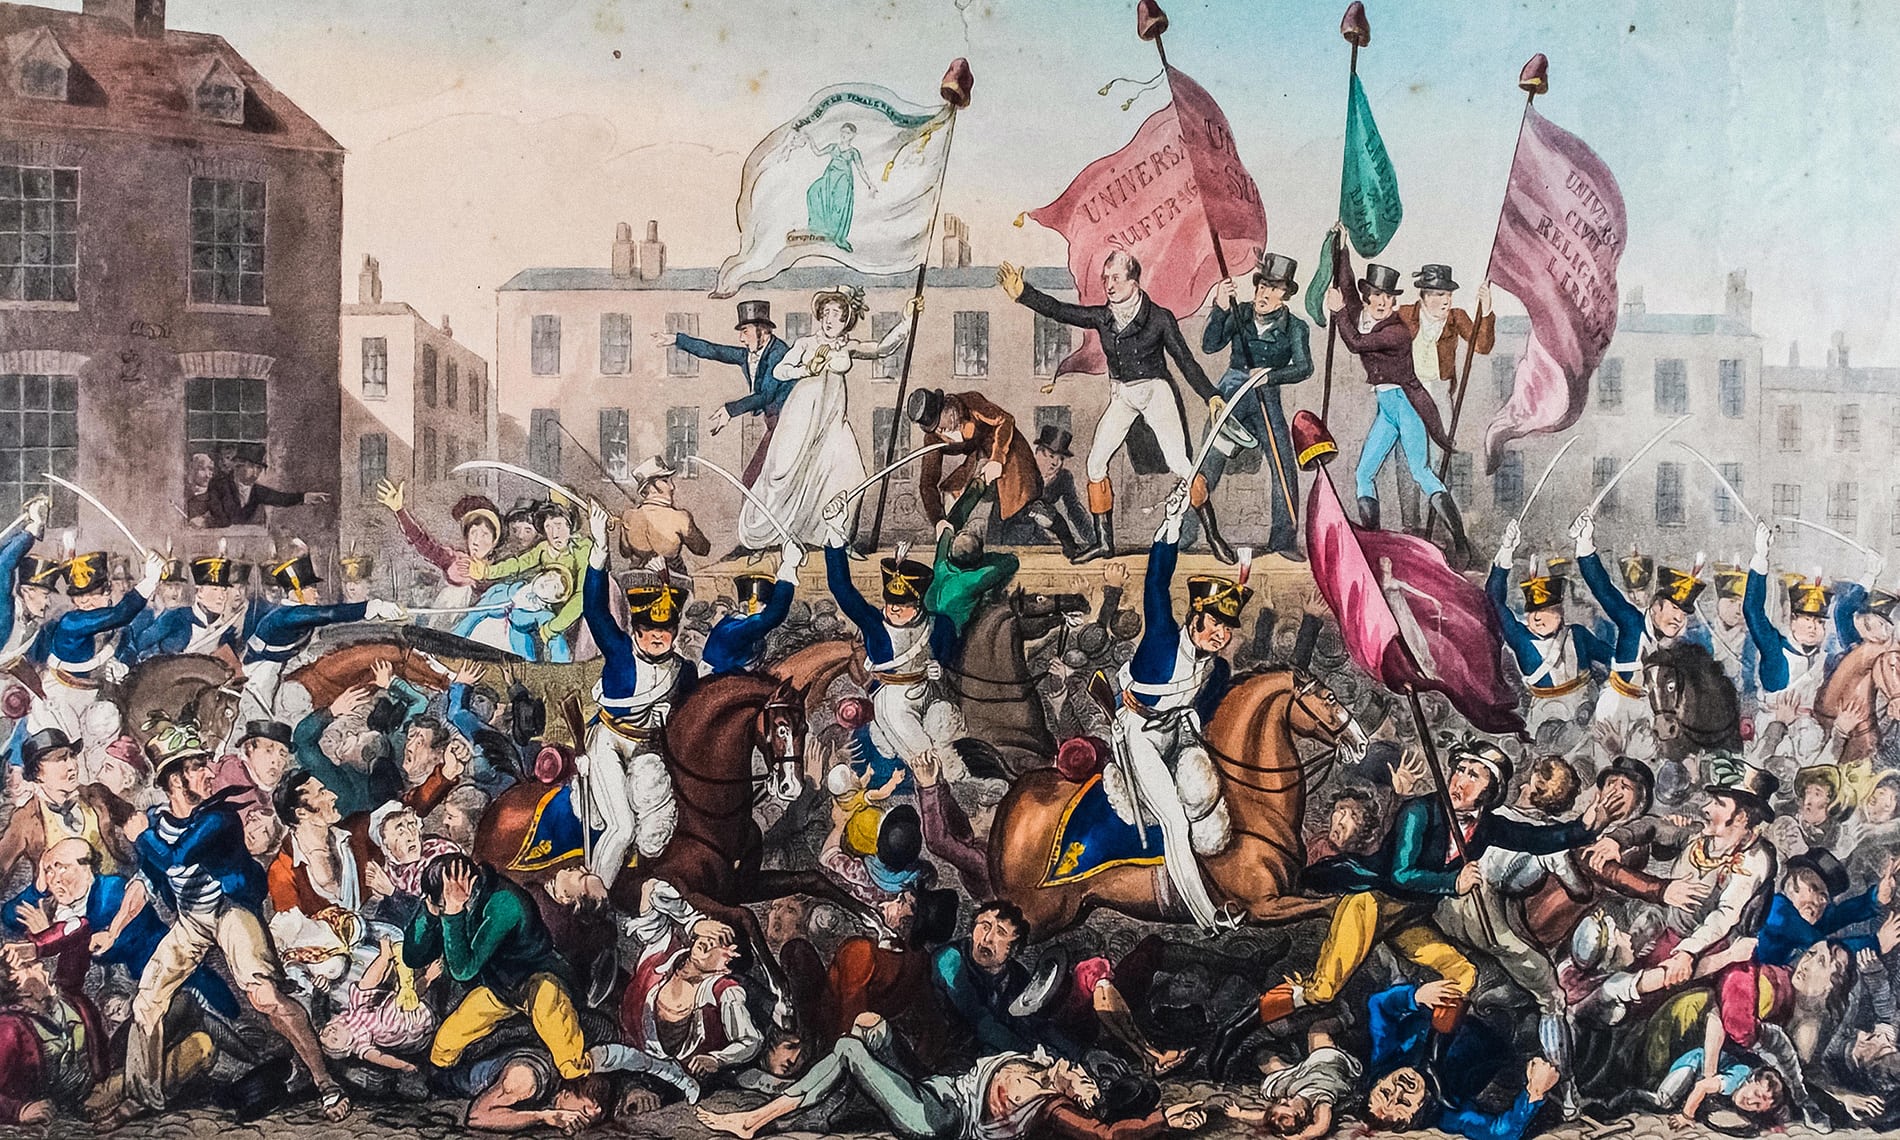 Print depicting the Peterloo Massacre, Manchester